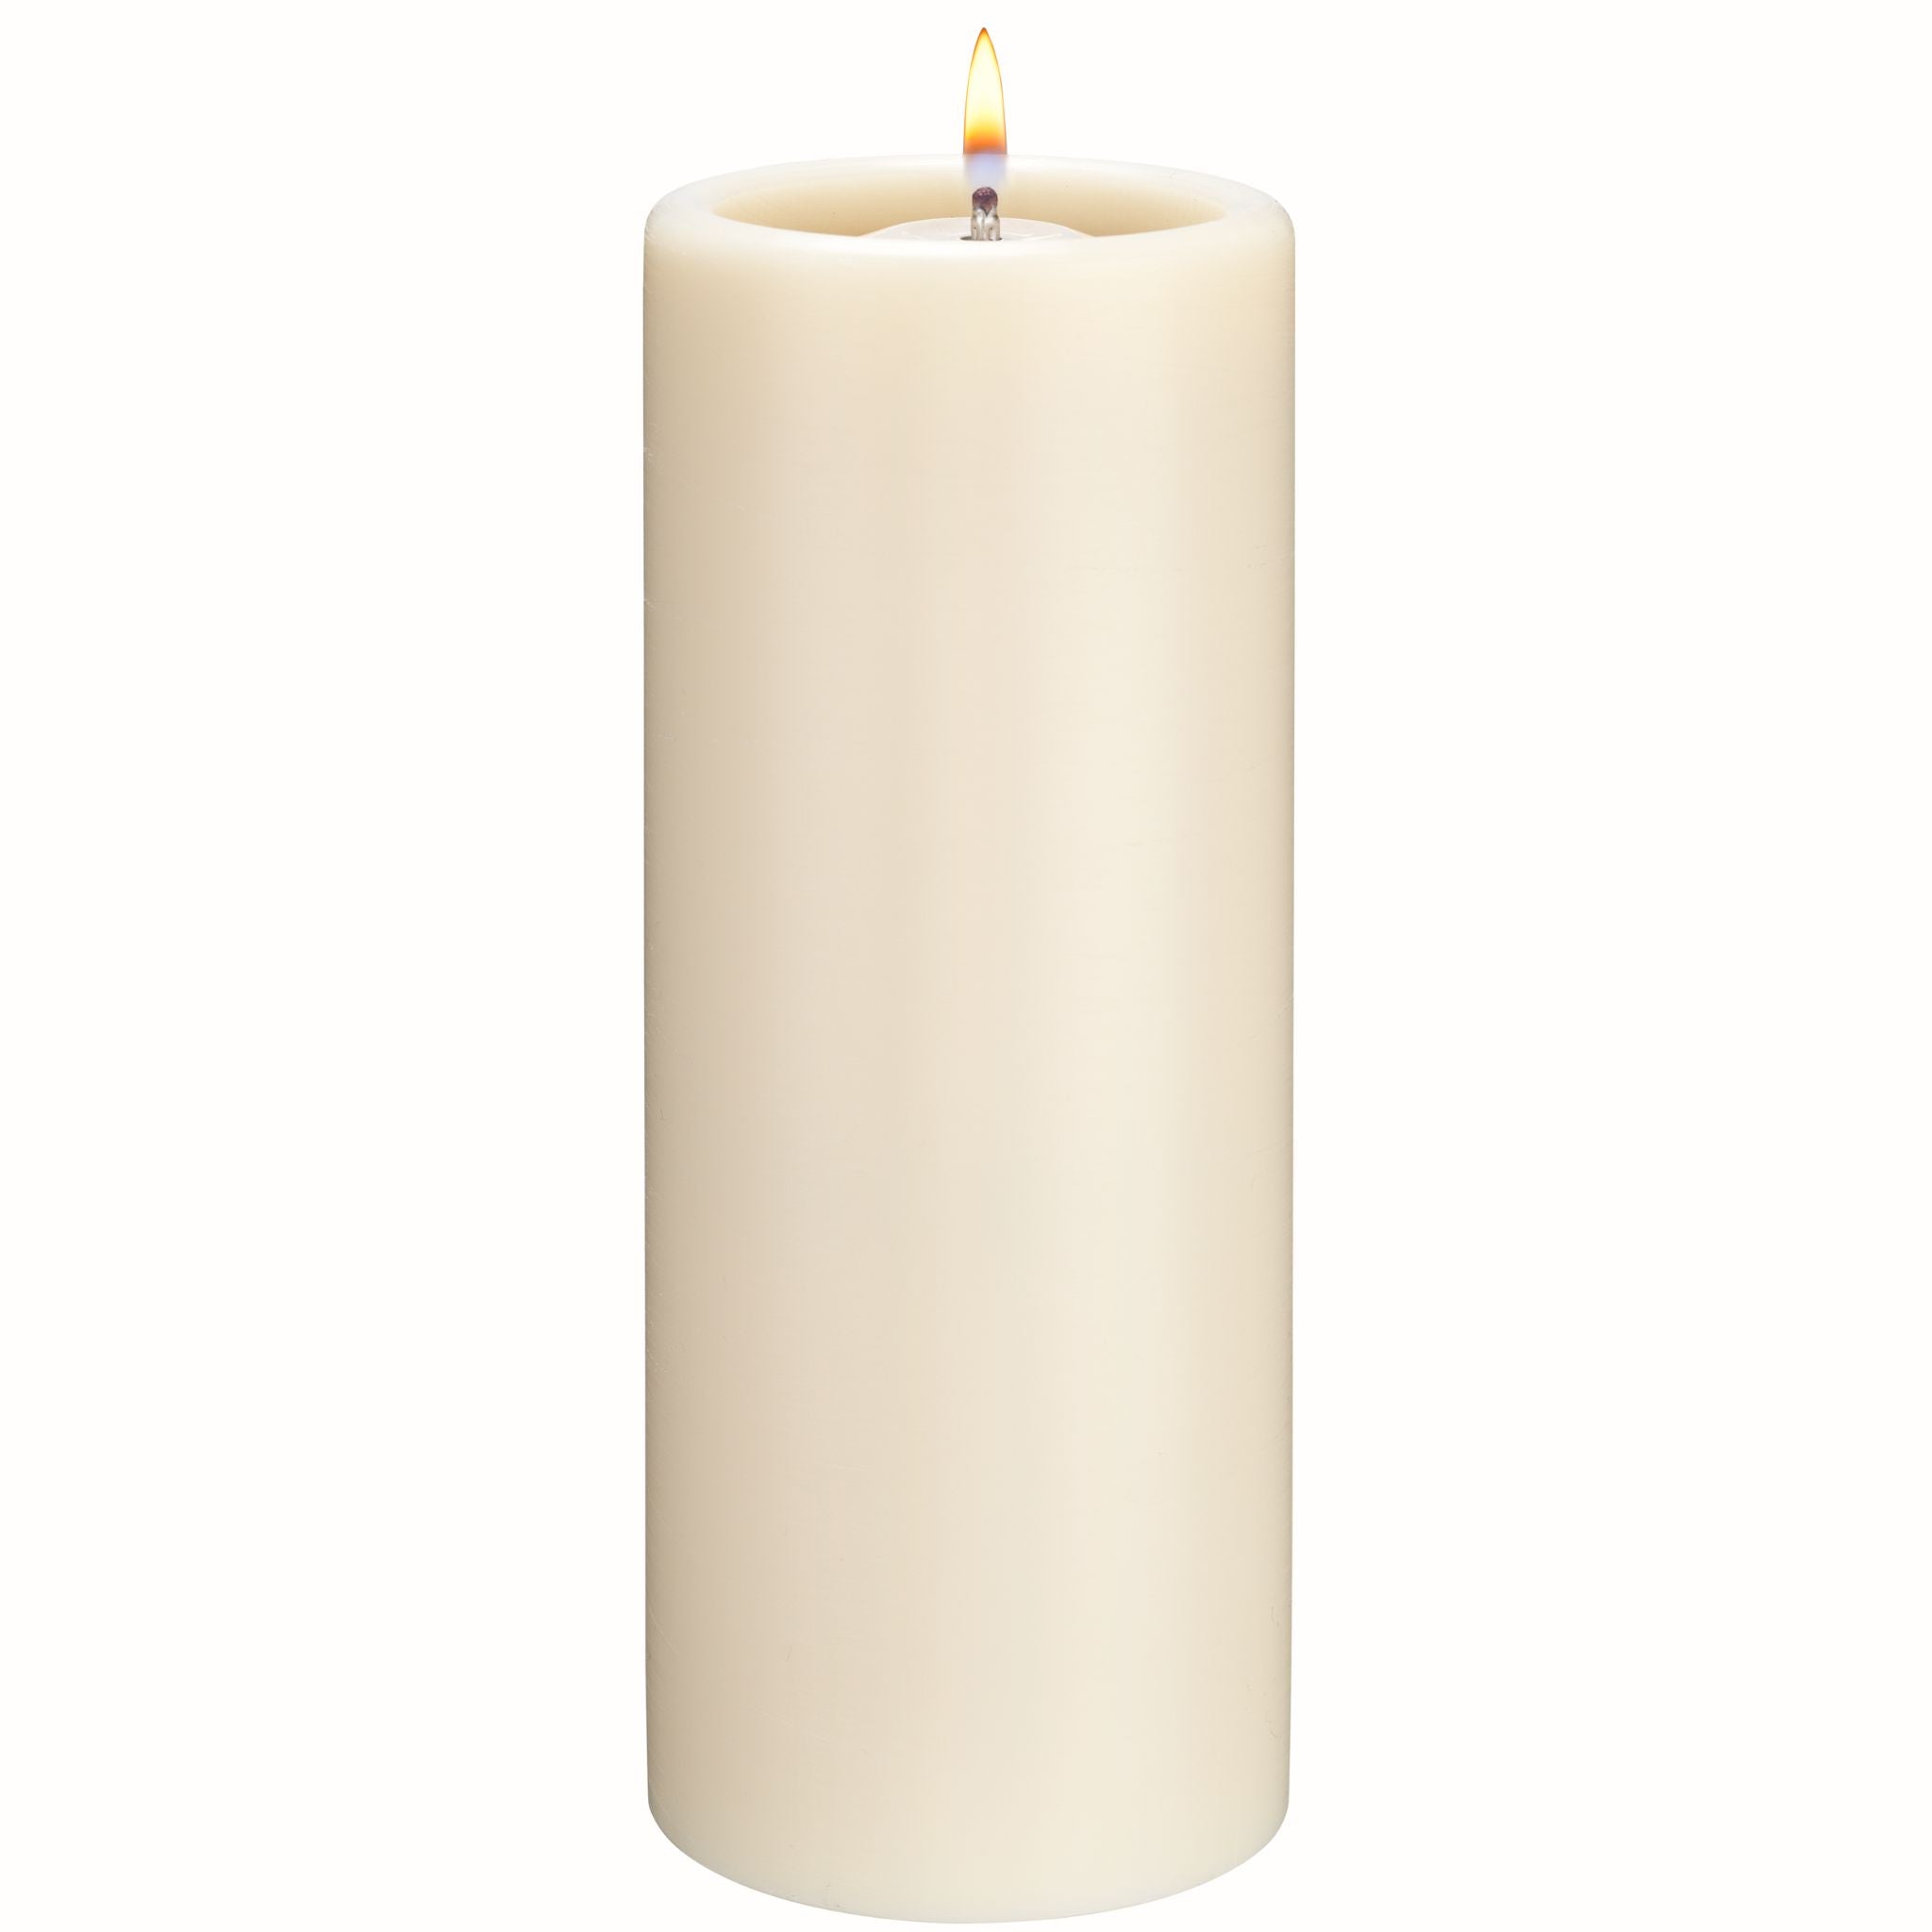 Safety candle for eternal burner 25-oS